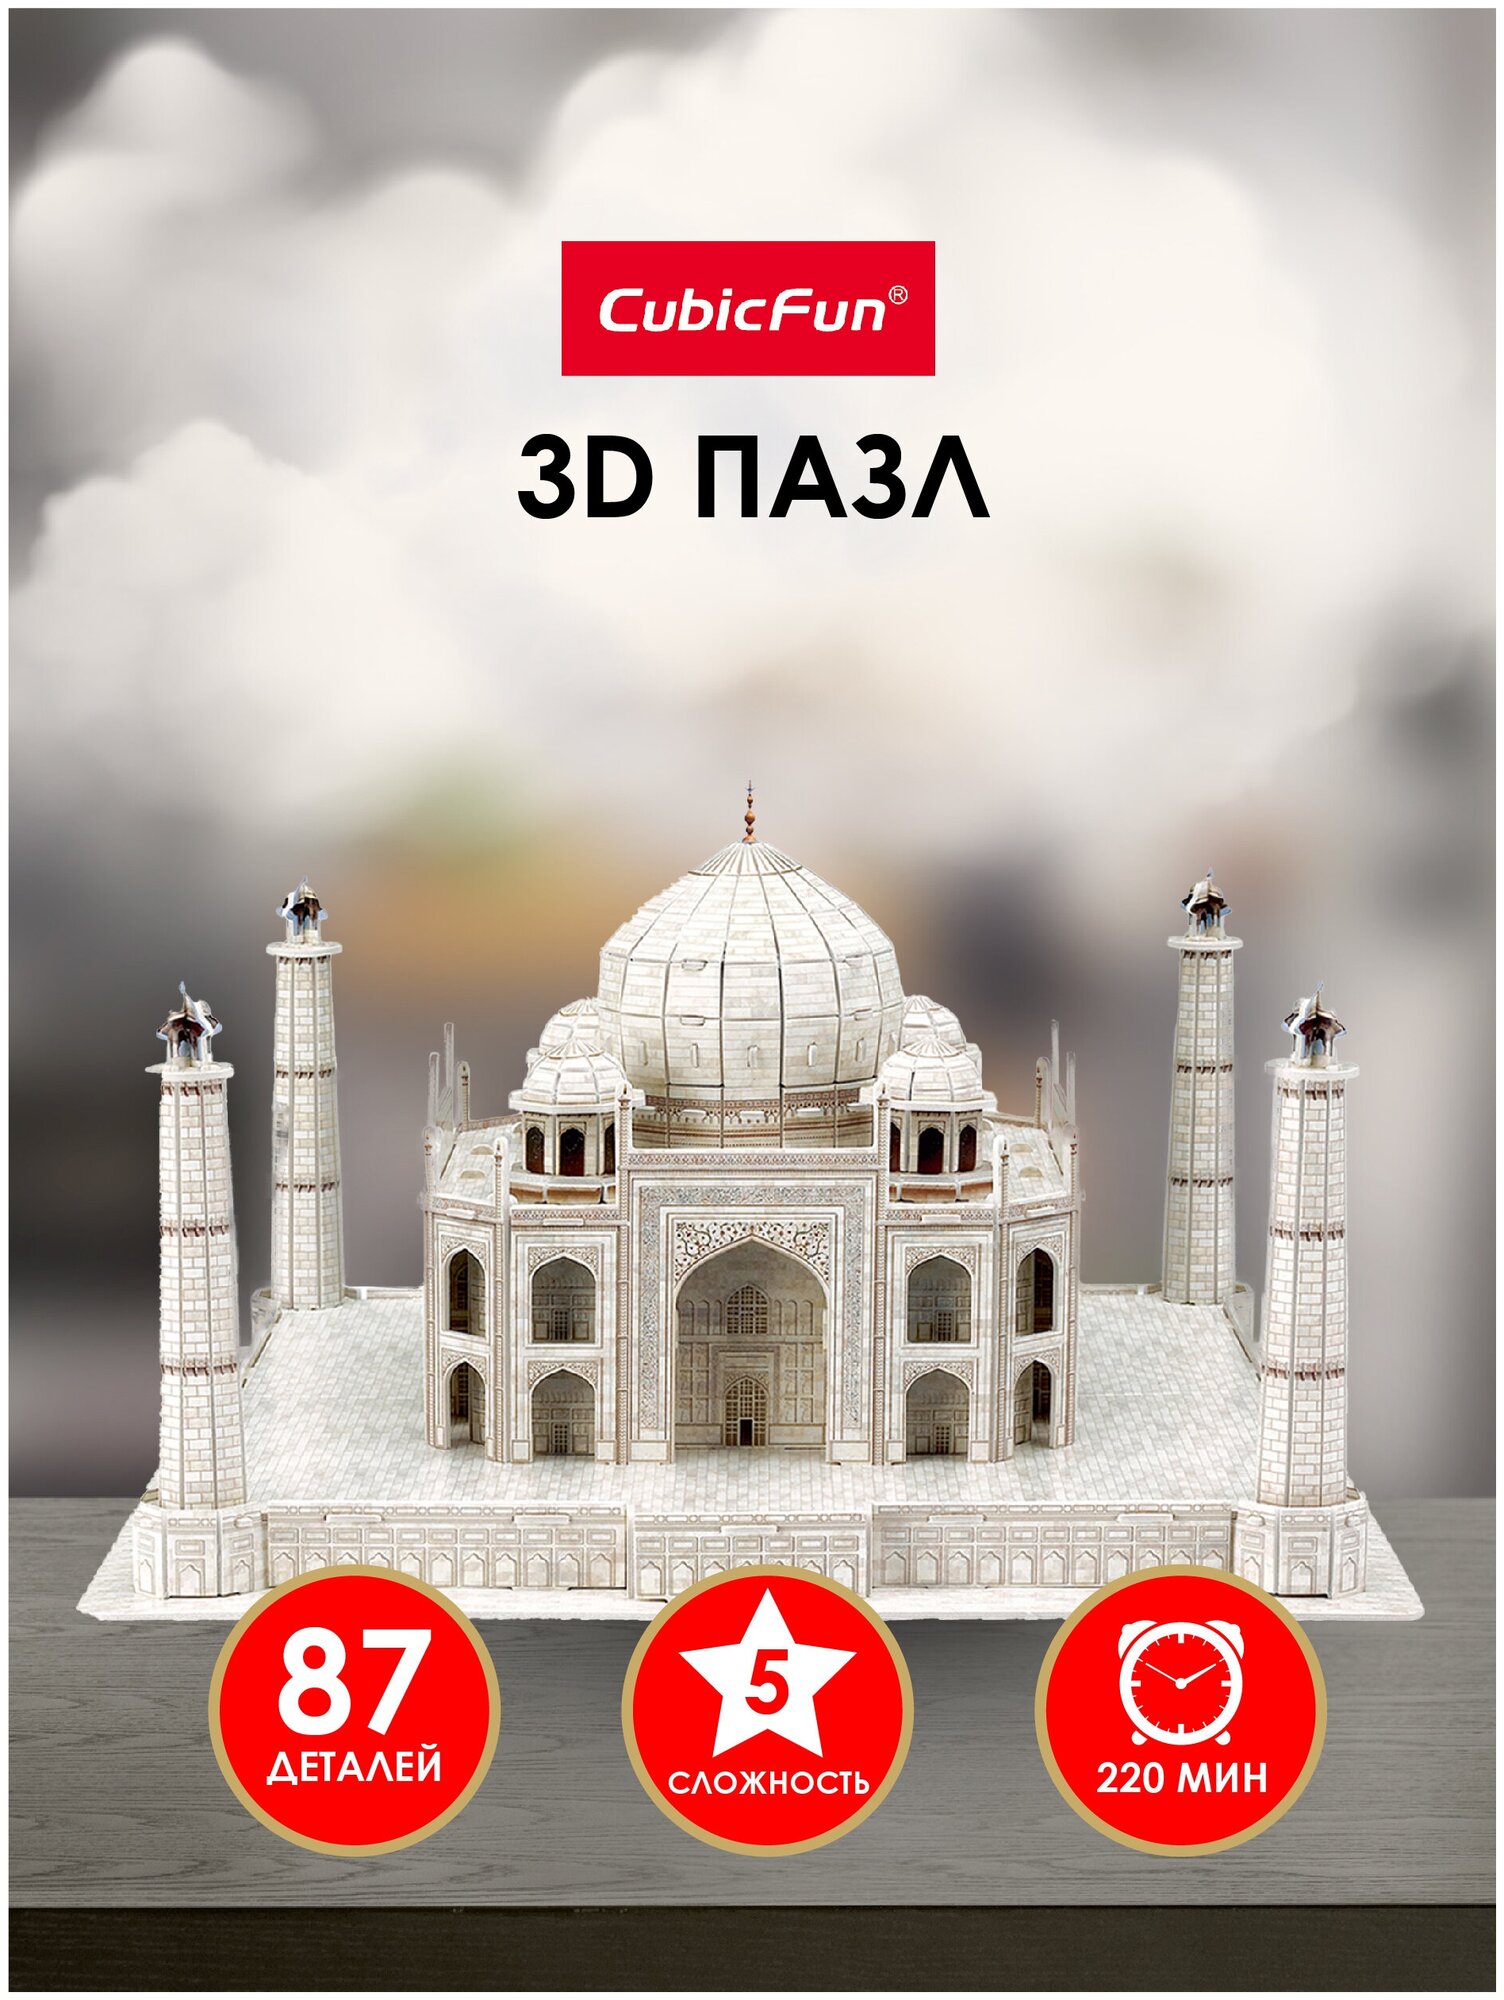 3D пазлы Cubic Fun - фото №3